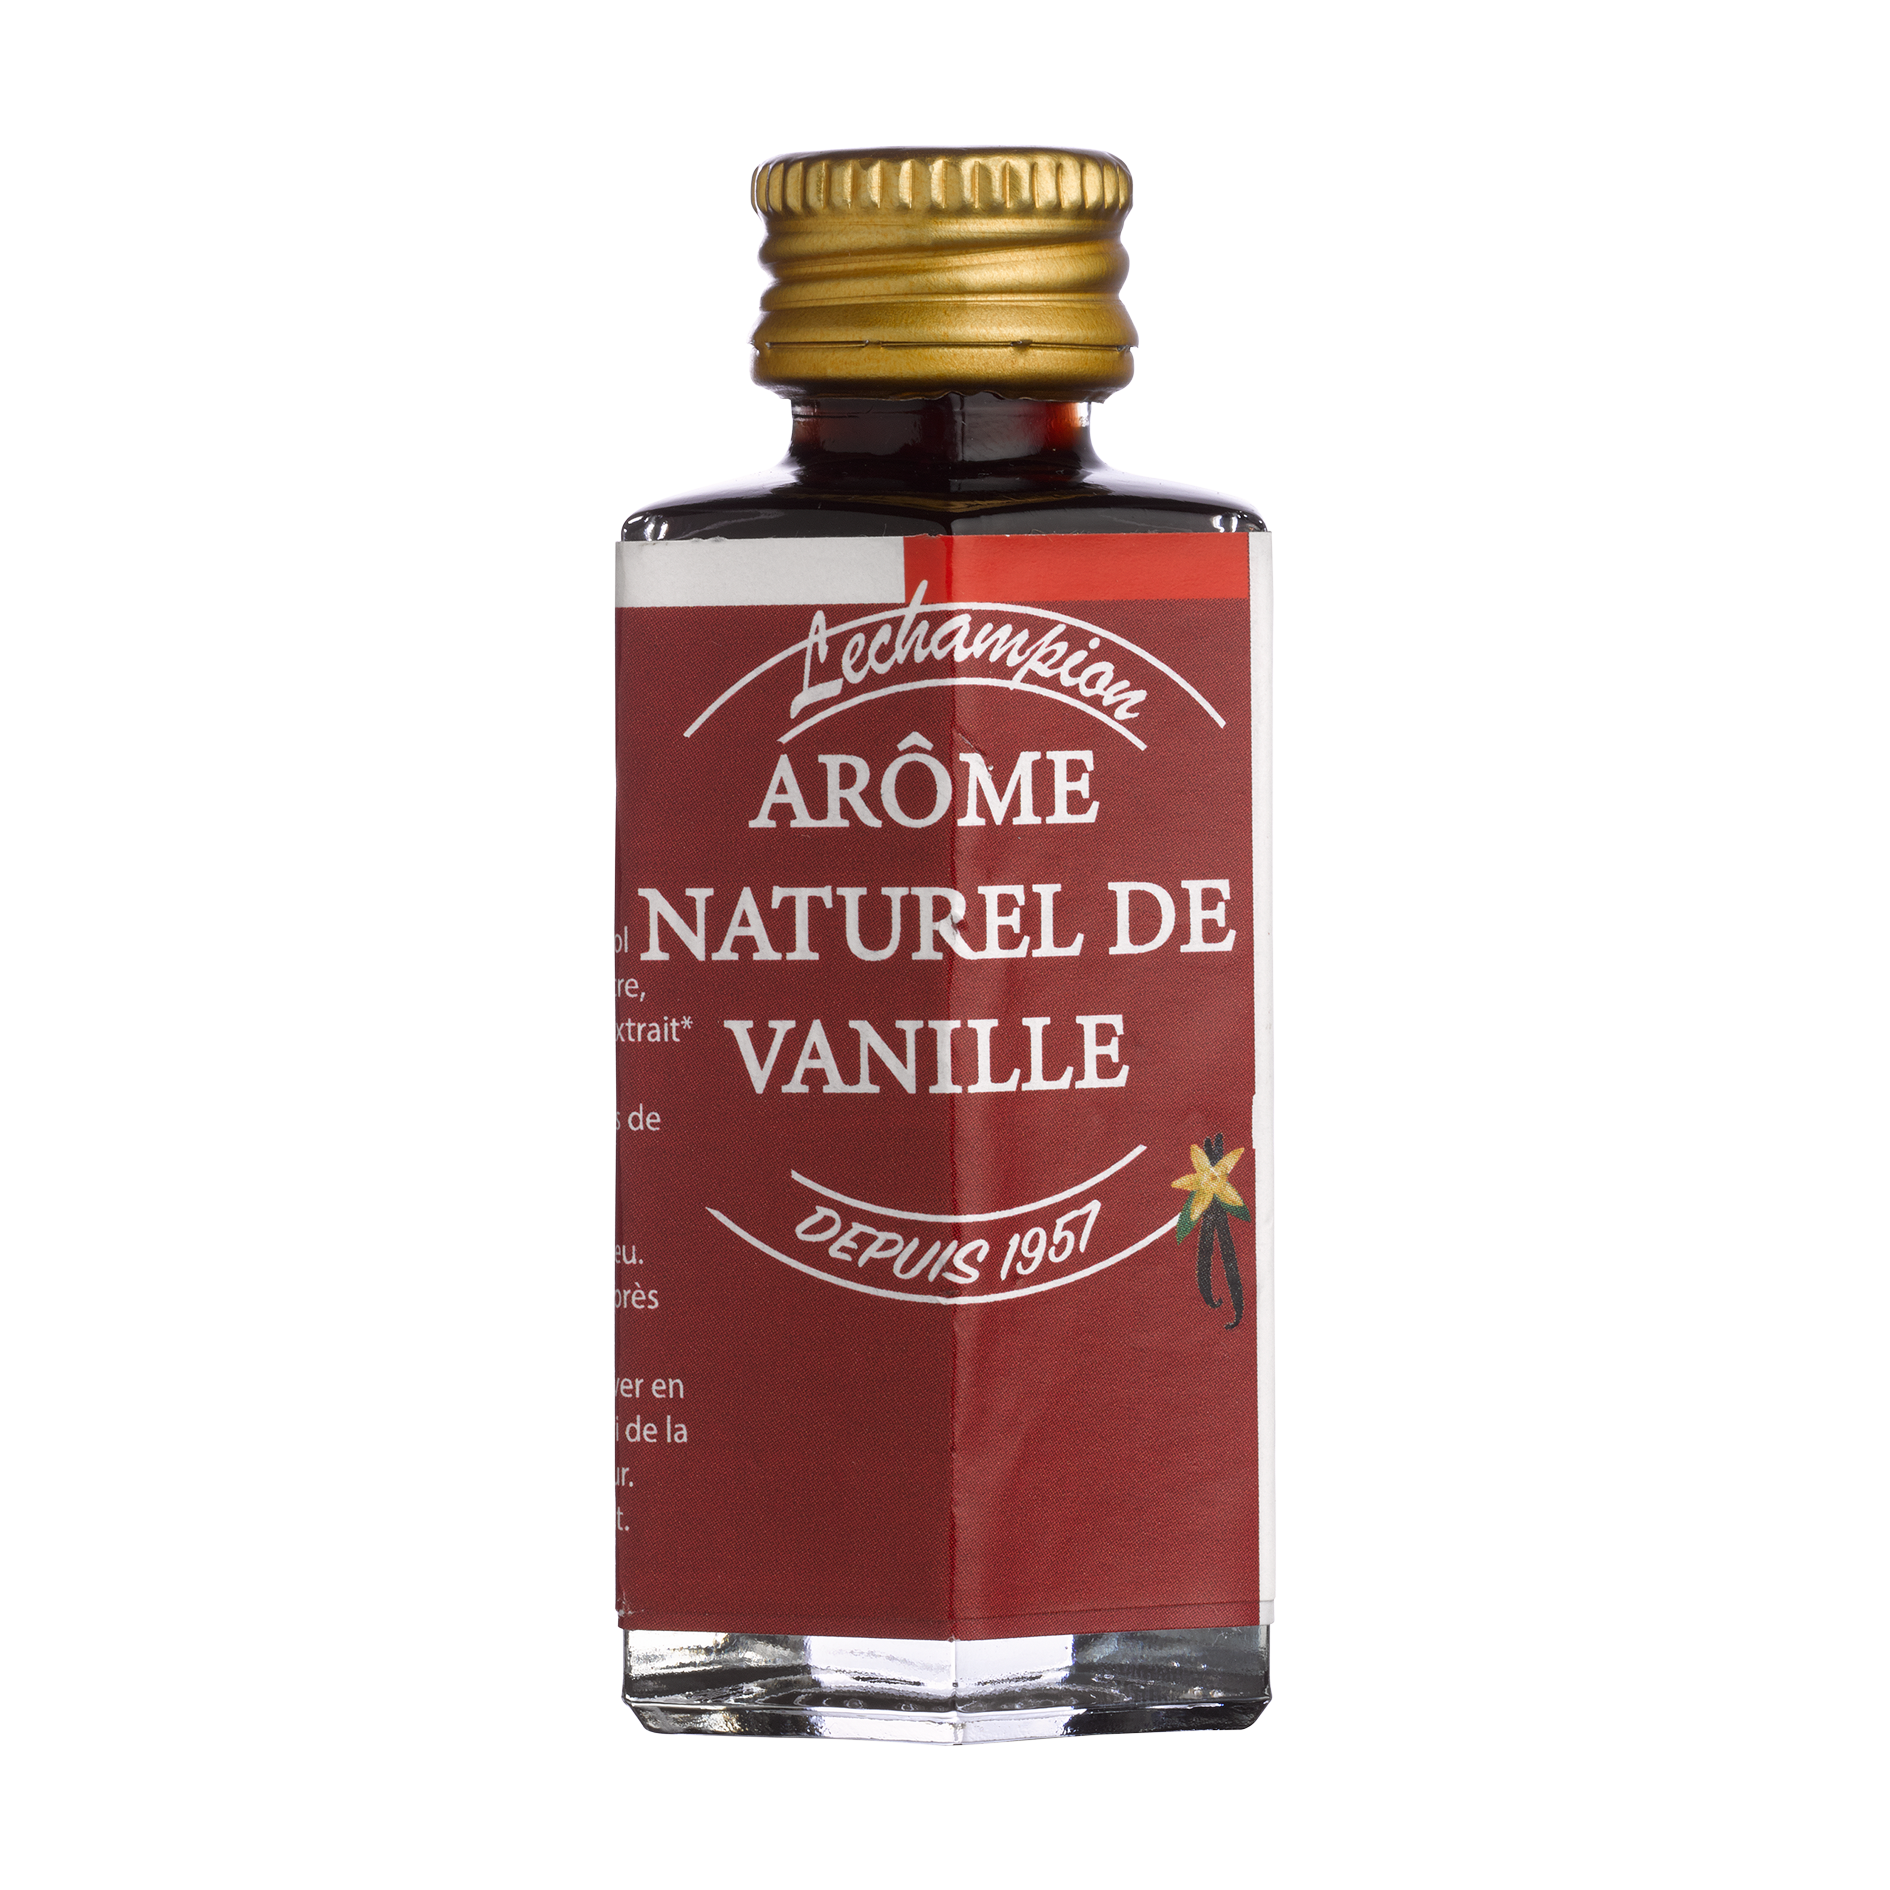 Arôme naturel de Vanille 15% 30ml